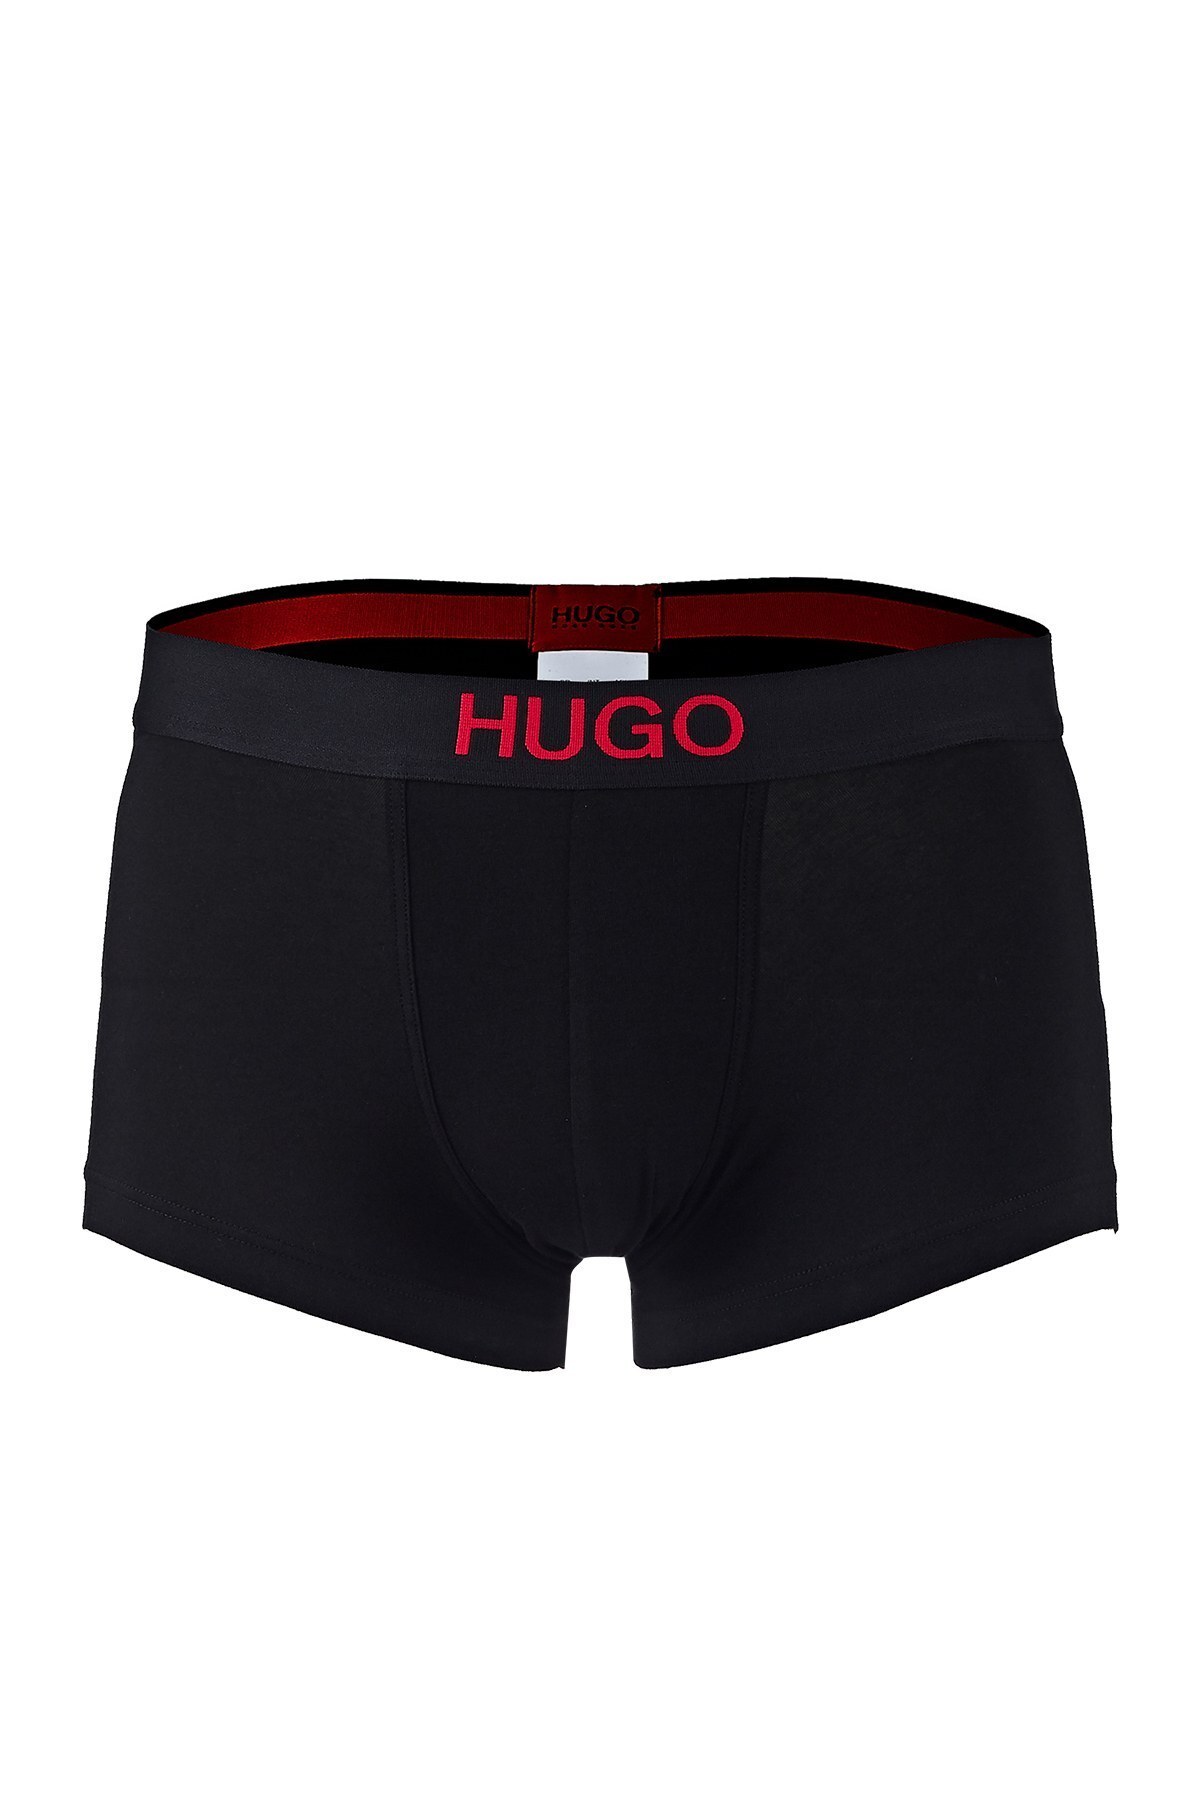 Hugo Boss Pamuklu Yumuşak Dokulu Esnek 2 Pack Erkek Boxer 50451416 430 SİYAH-LACİVERT